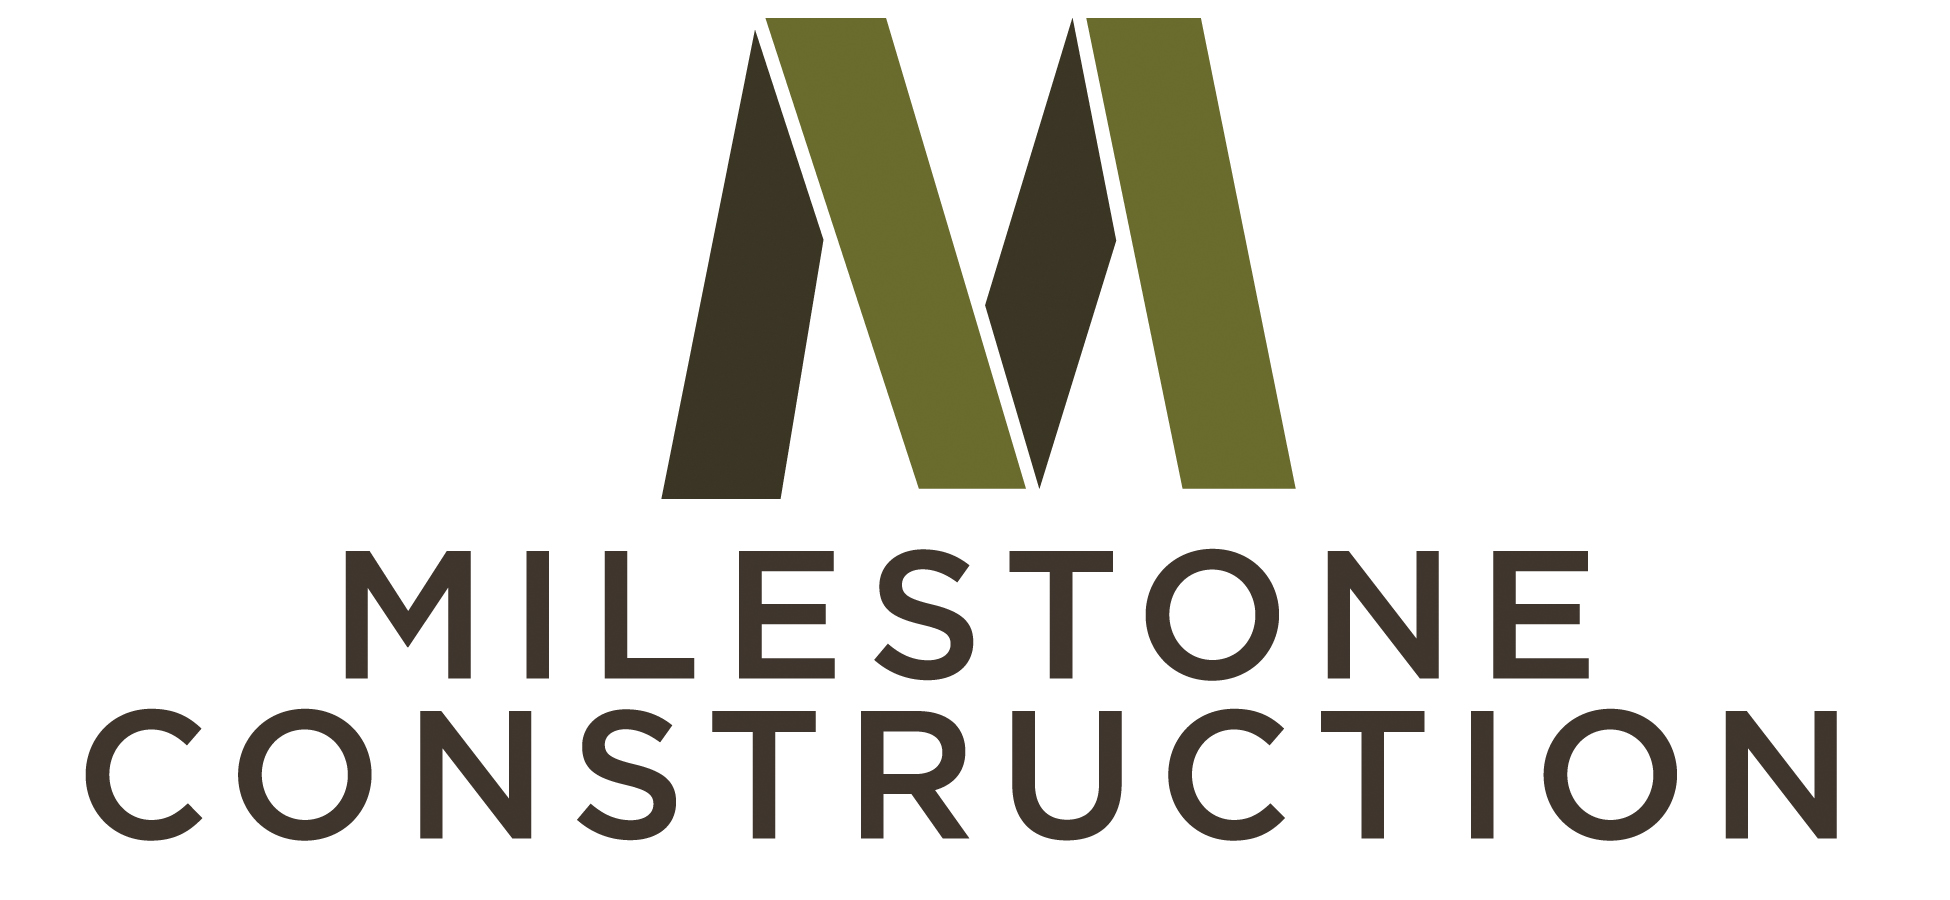 Milestone Construction